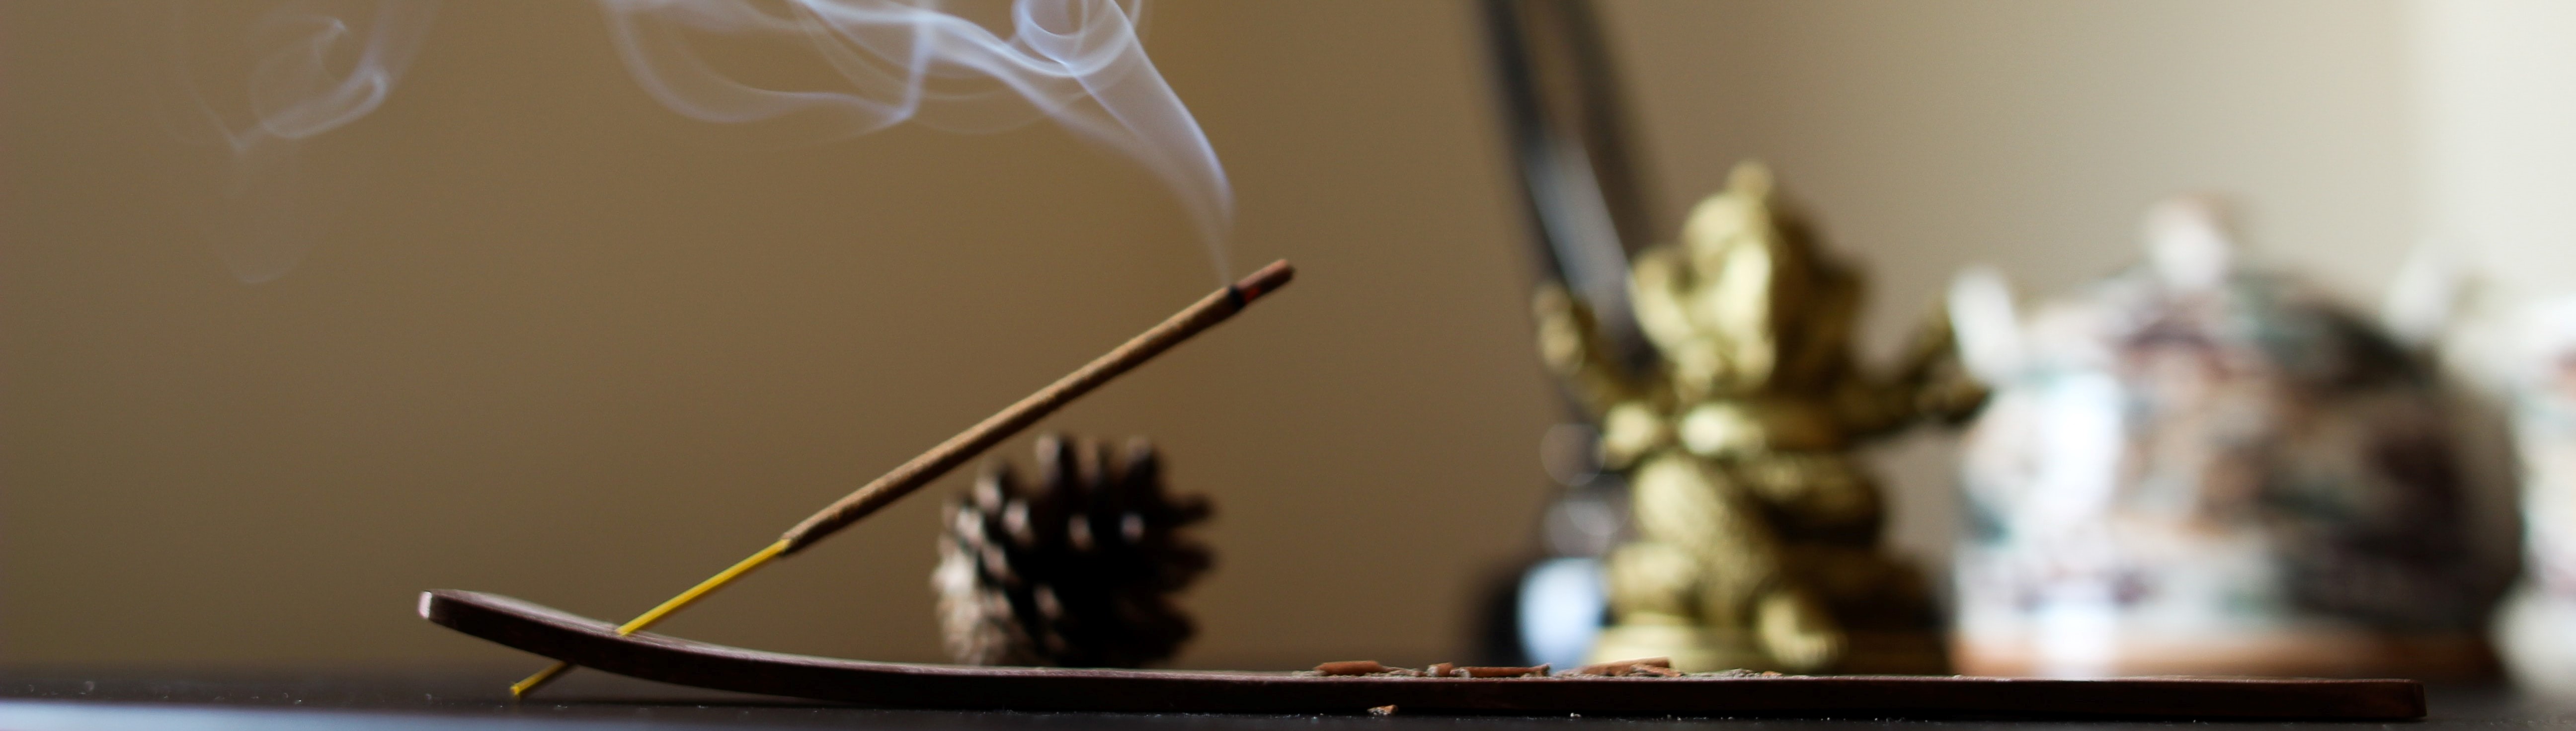 incense_stick